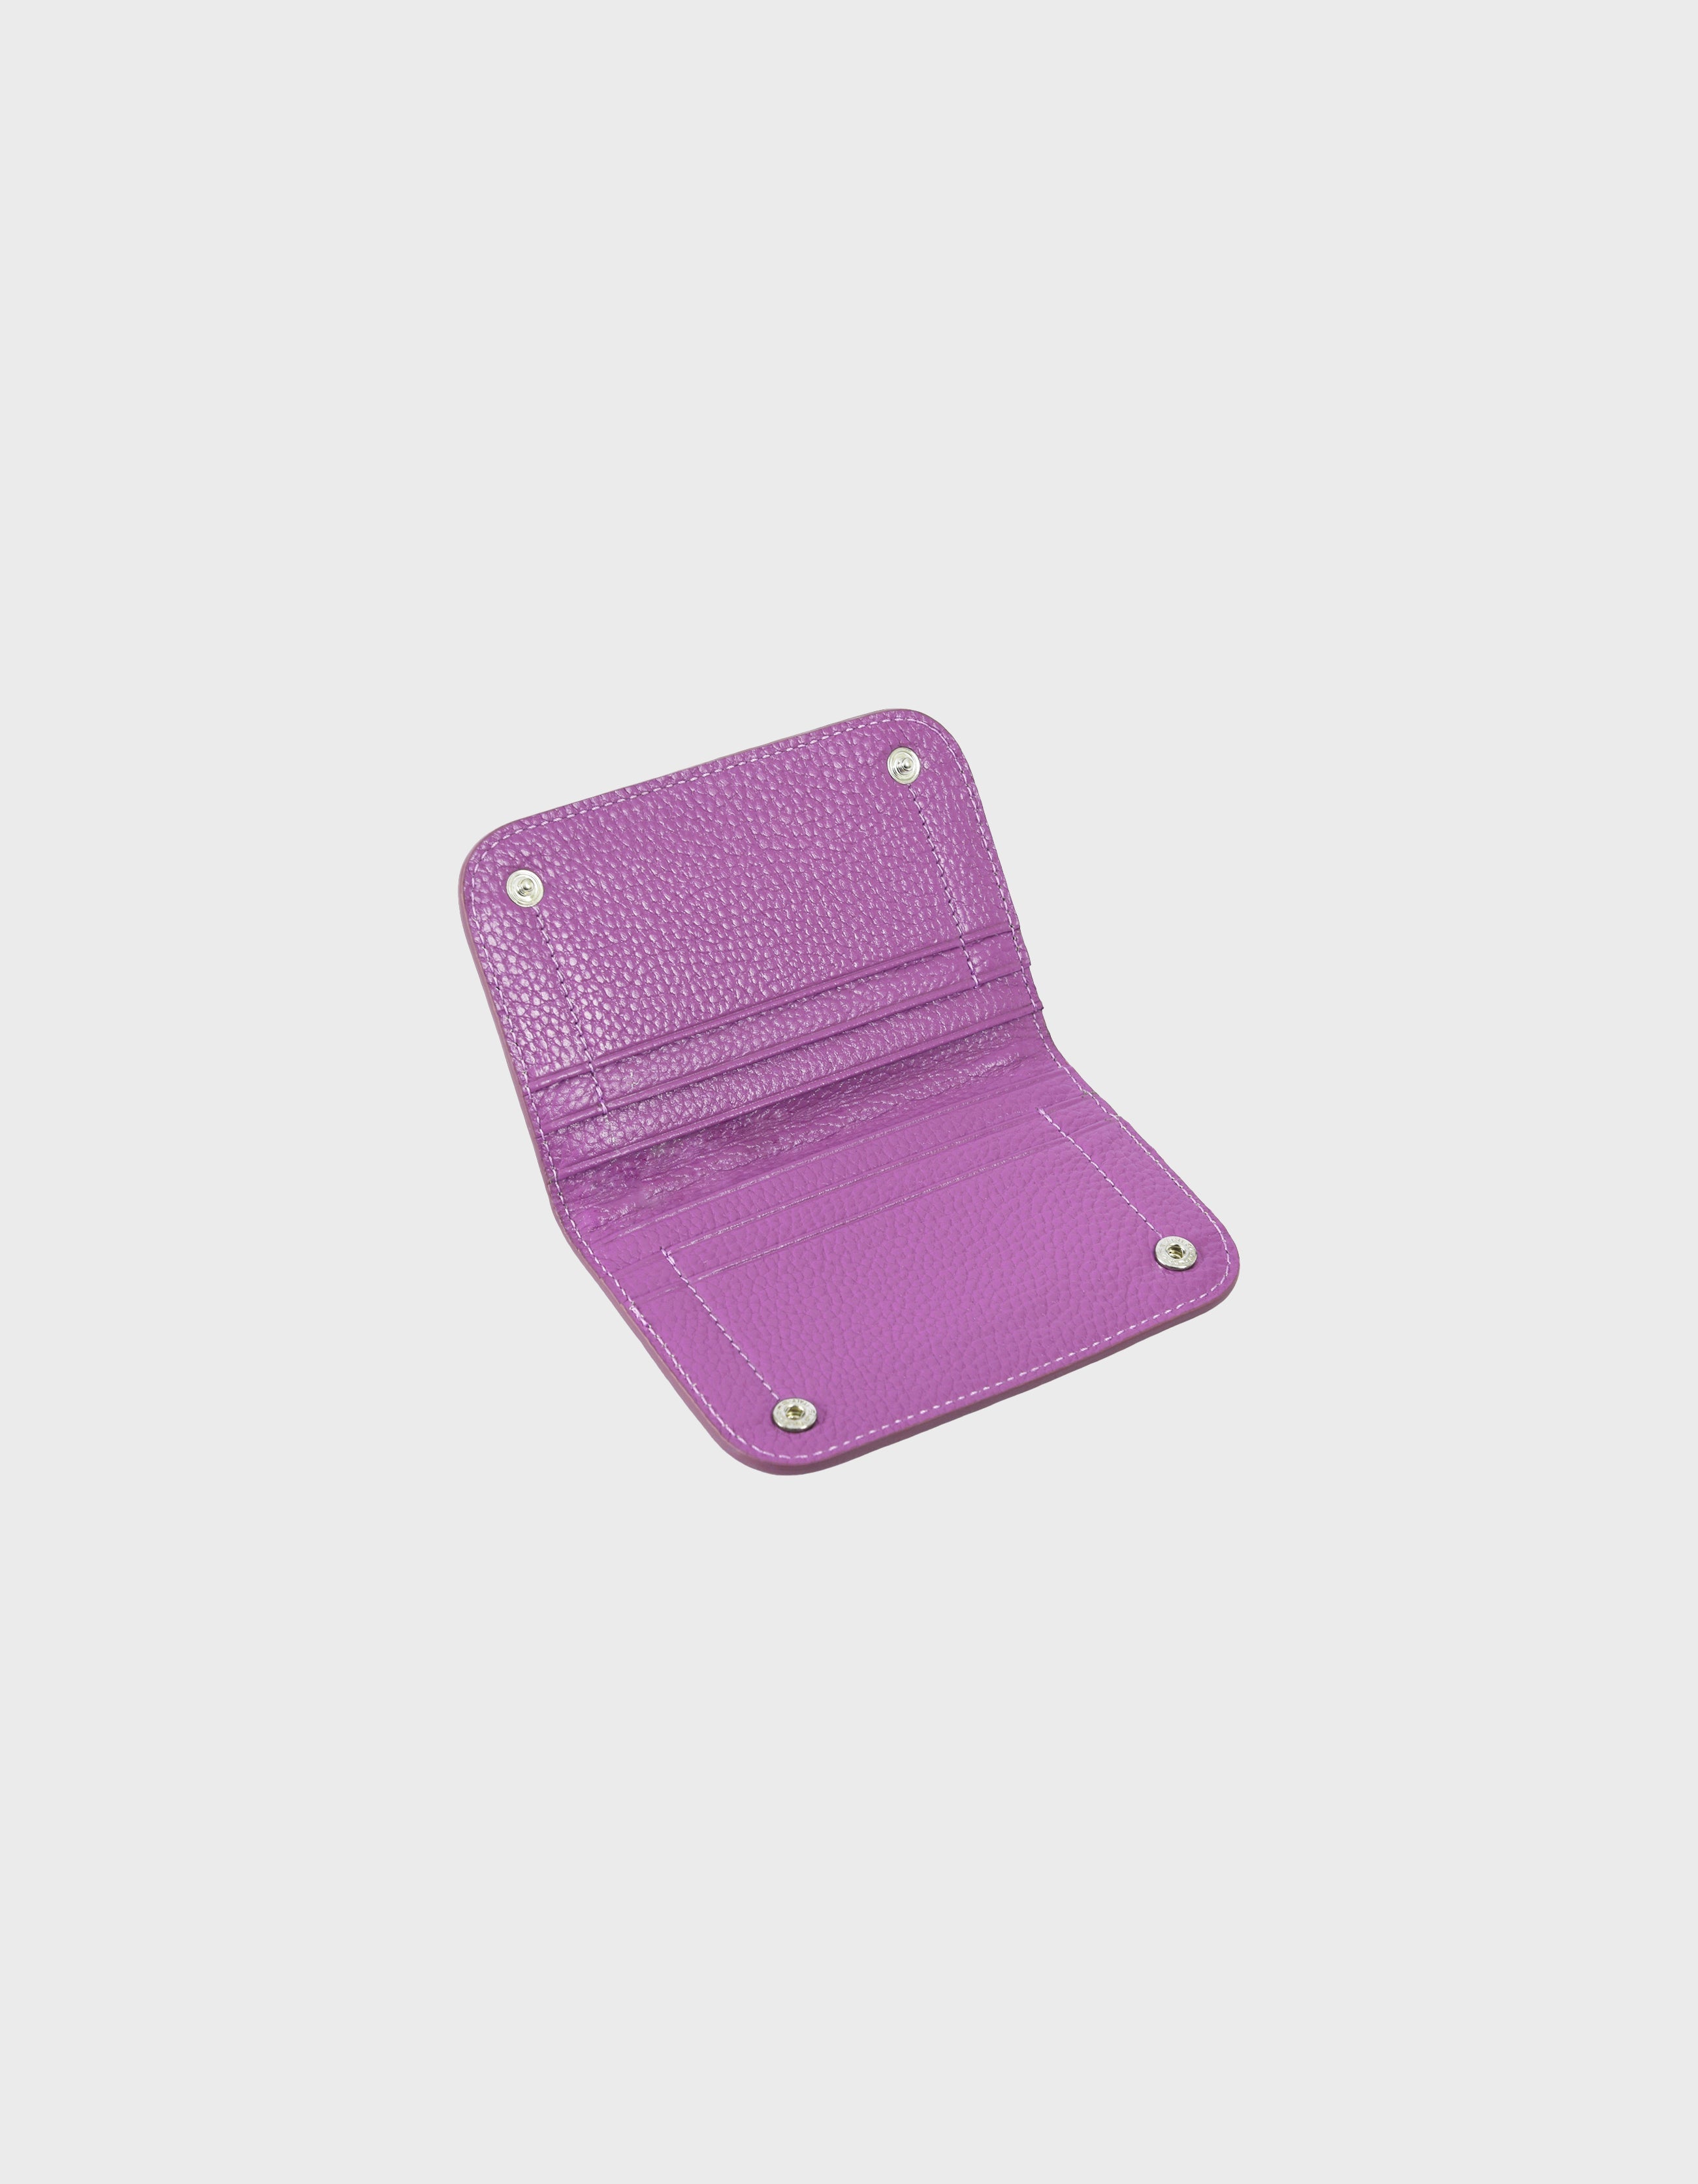 Hiva Atelier | Alae Coin Purse & Card Holder Purple | Beautiful and Versatile